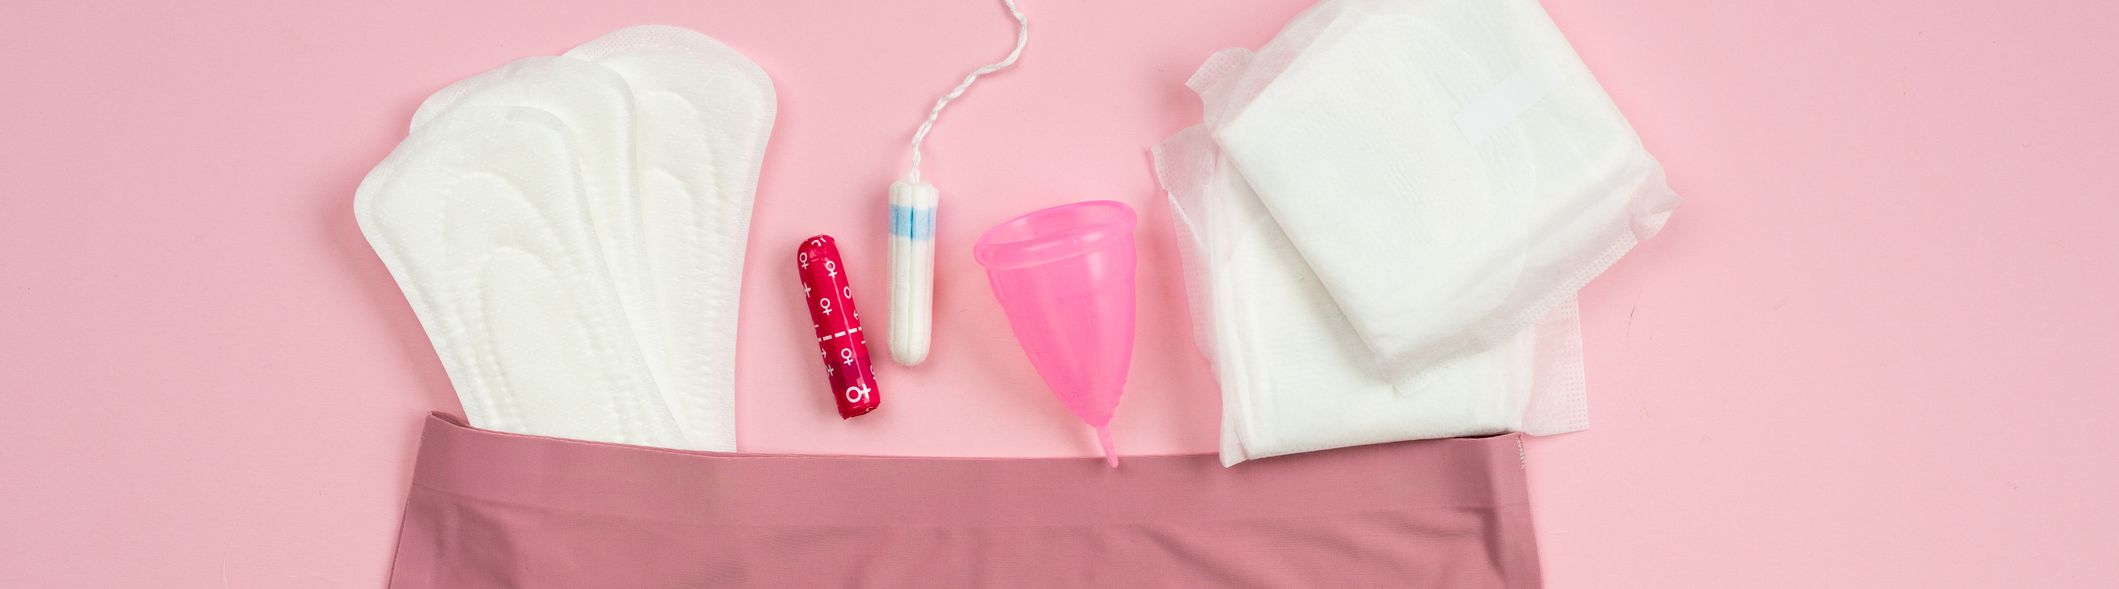 Menstrual cycle health and hygiene